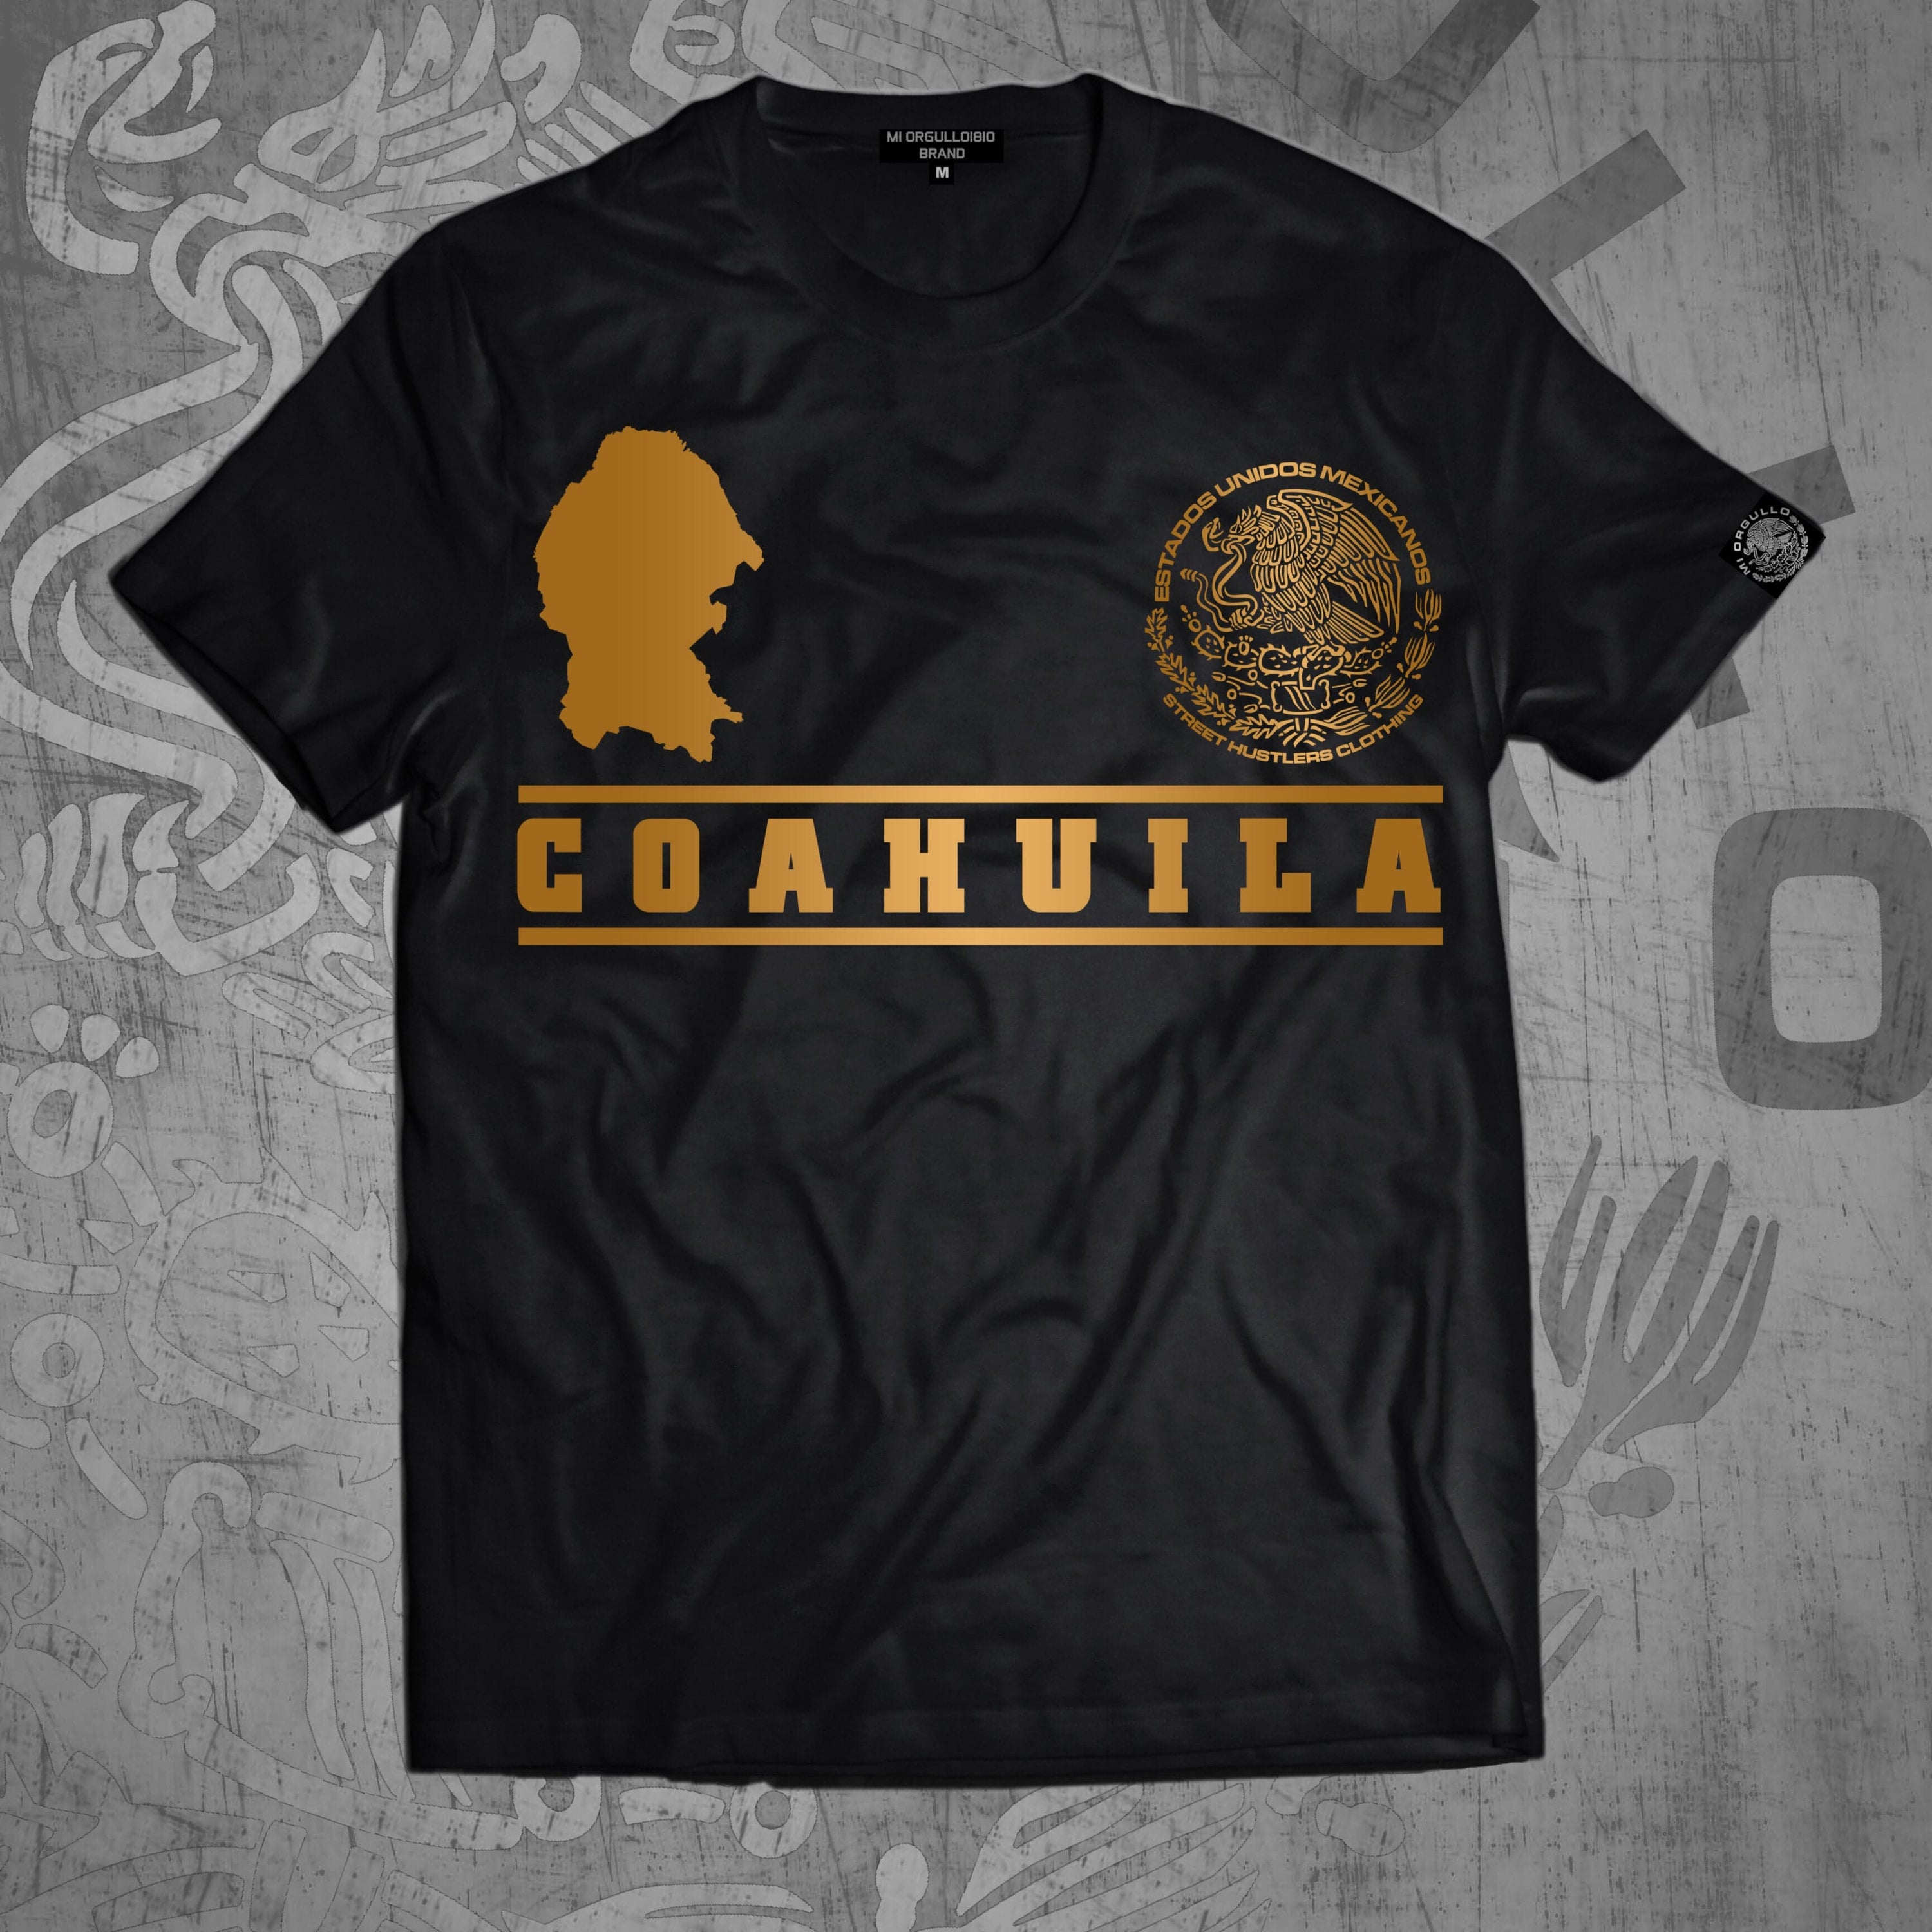 COAHUILA BLACK T-SHIRT